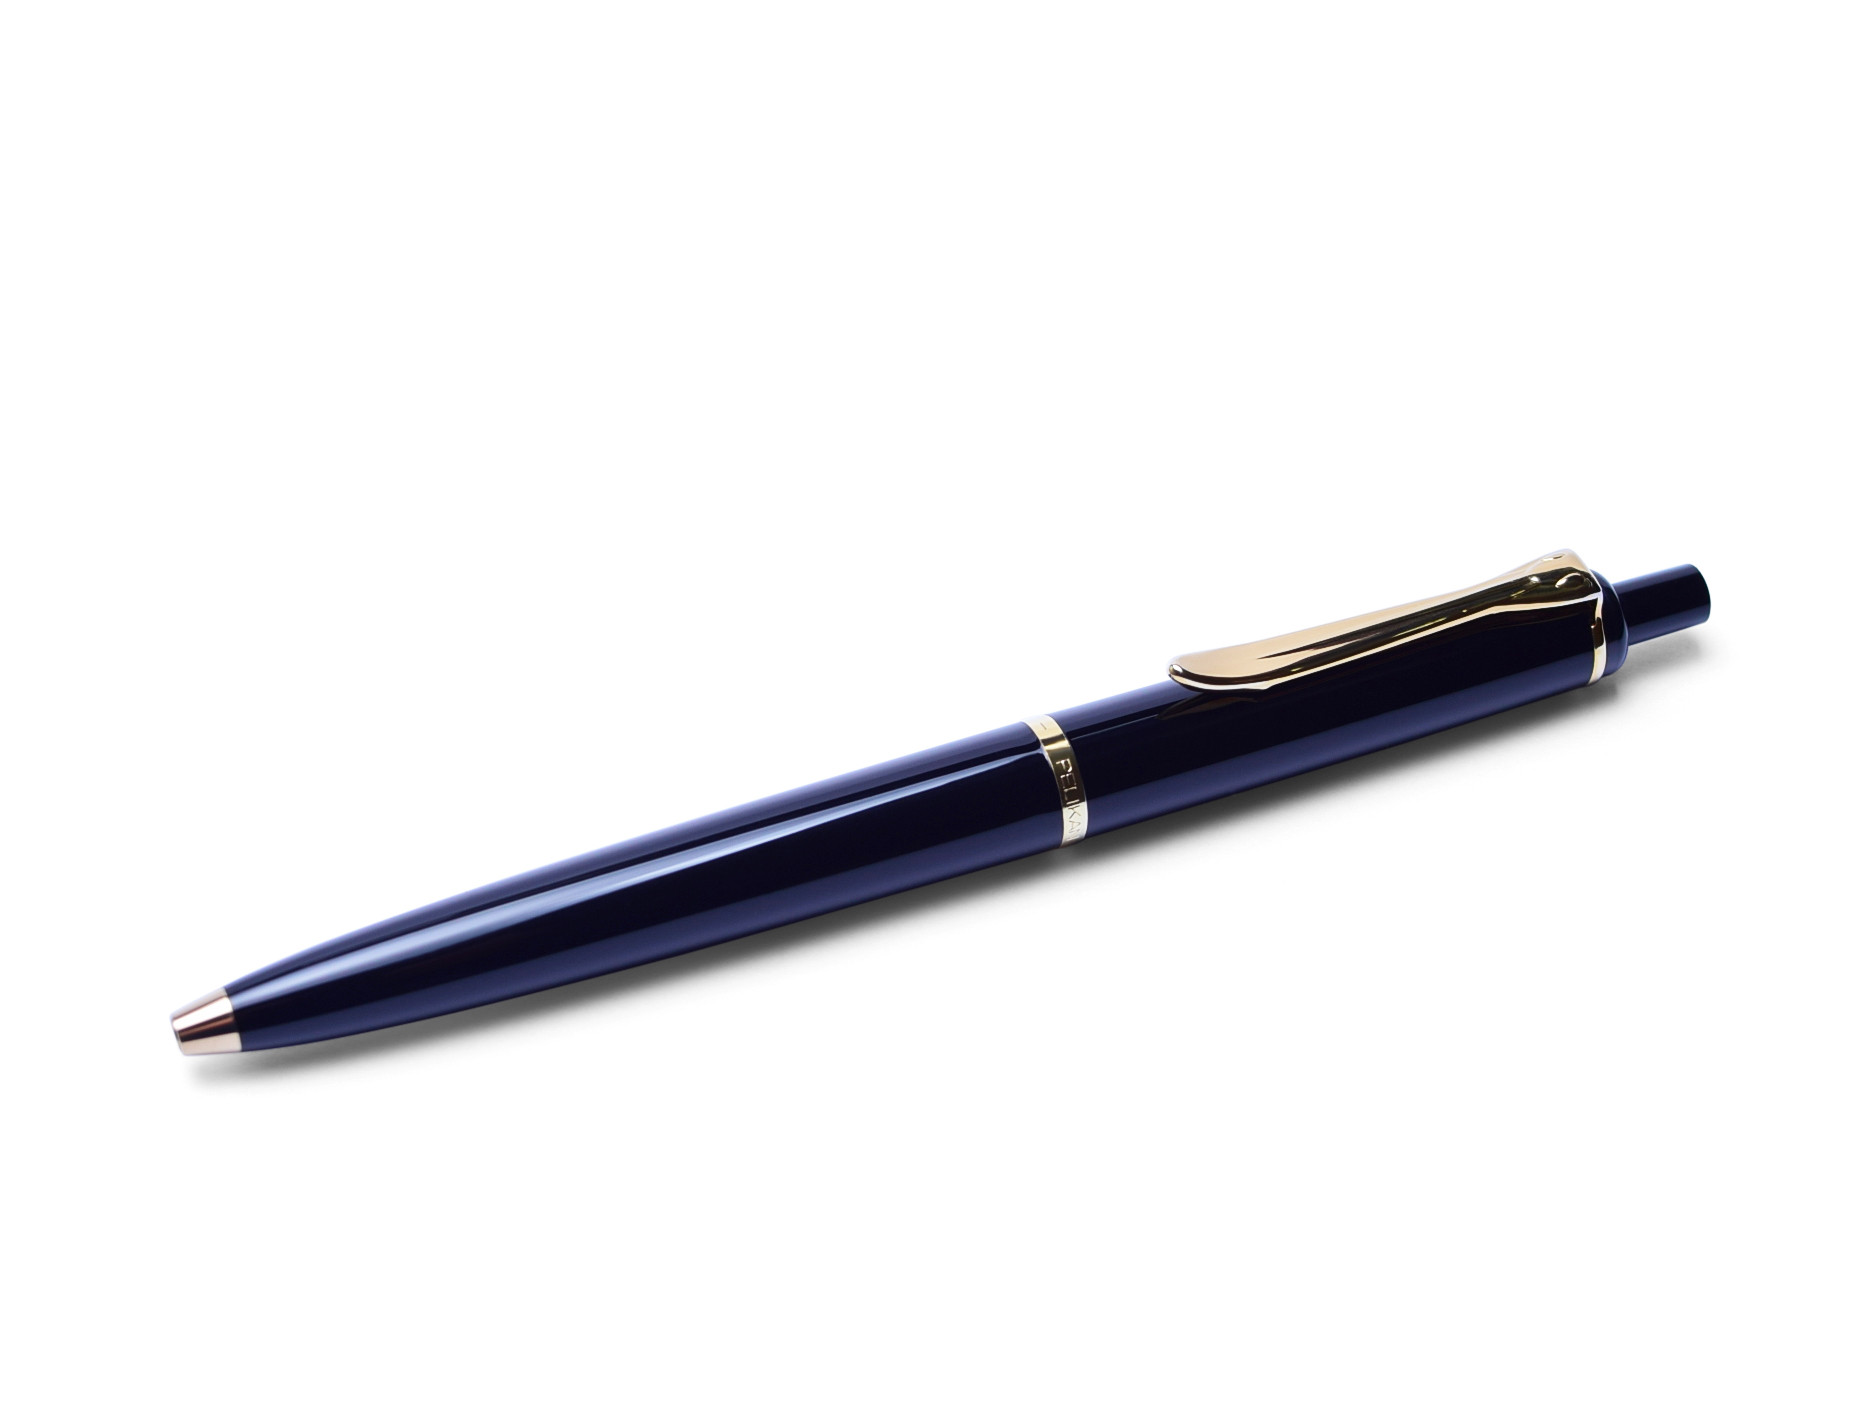 Made in Germany Schwarz Pelikan Ballpoint Pen Tradition K100 Black